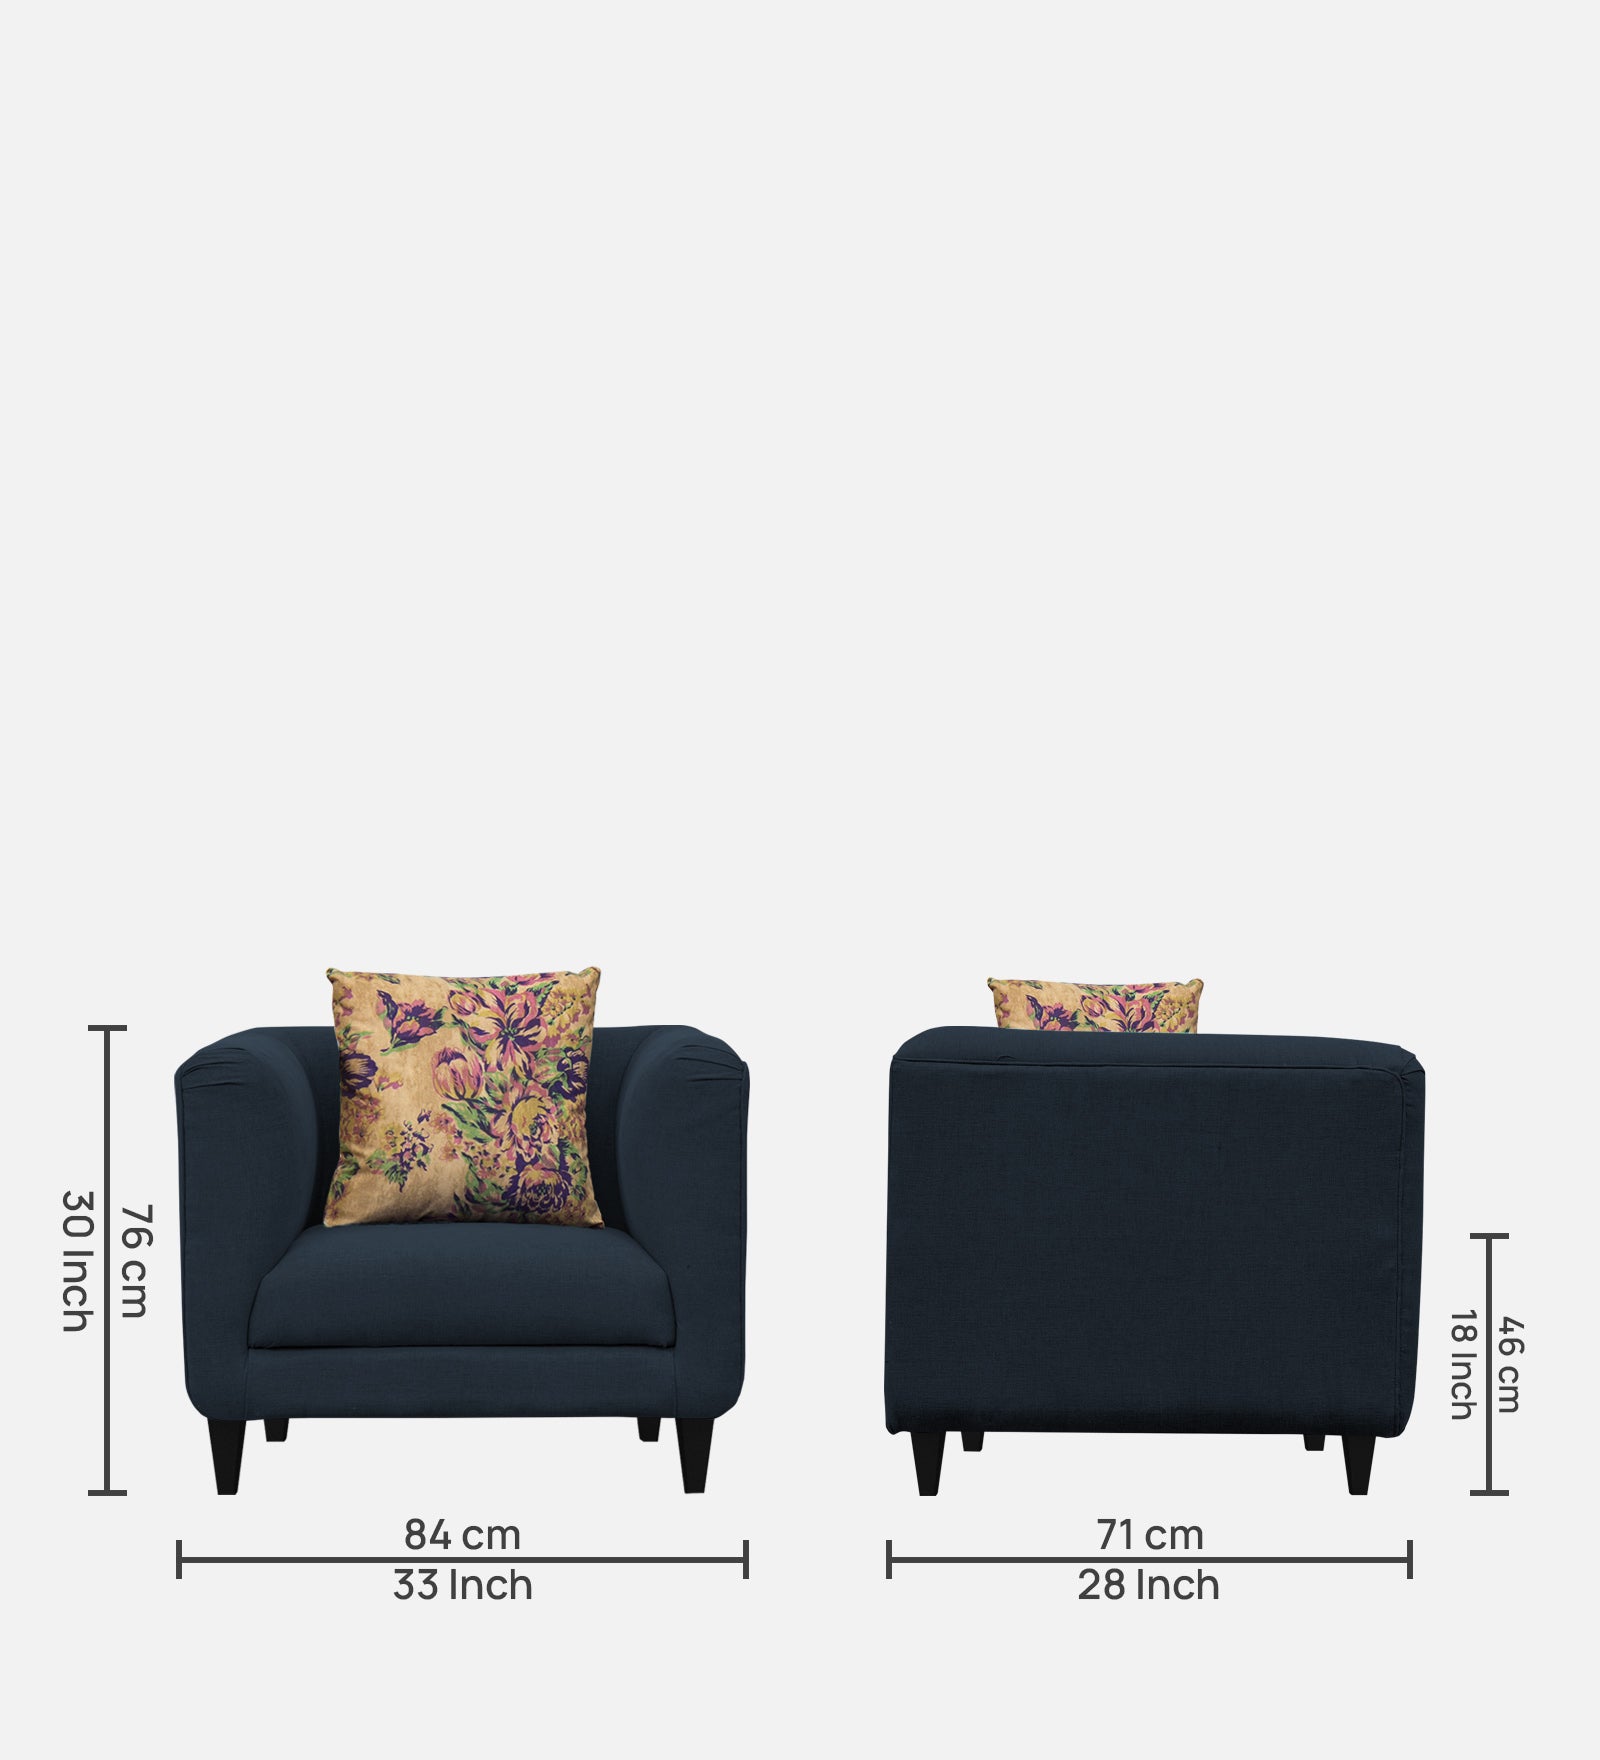 Niki Fabric 1 Seater Sofa in Denim Blue Colour